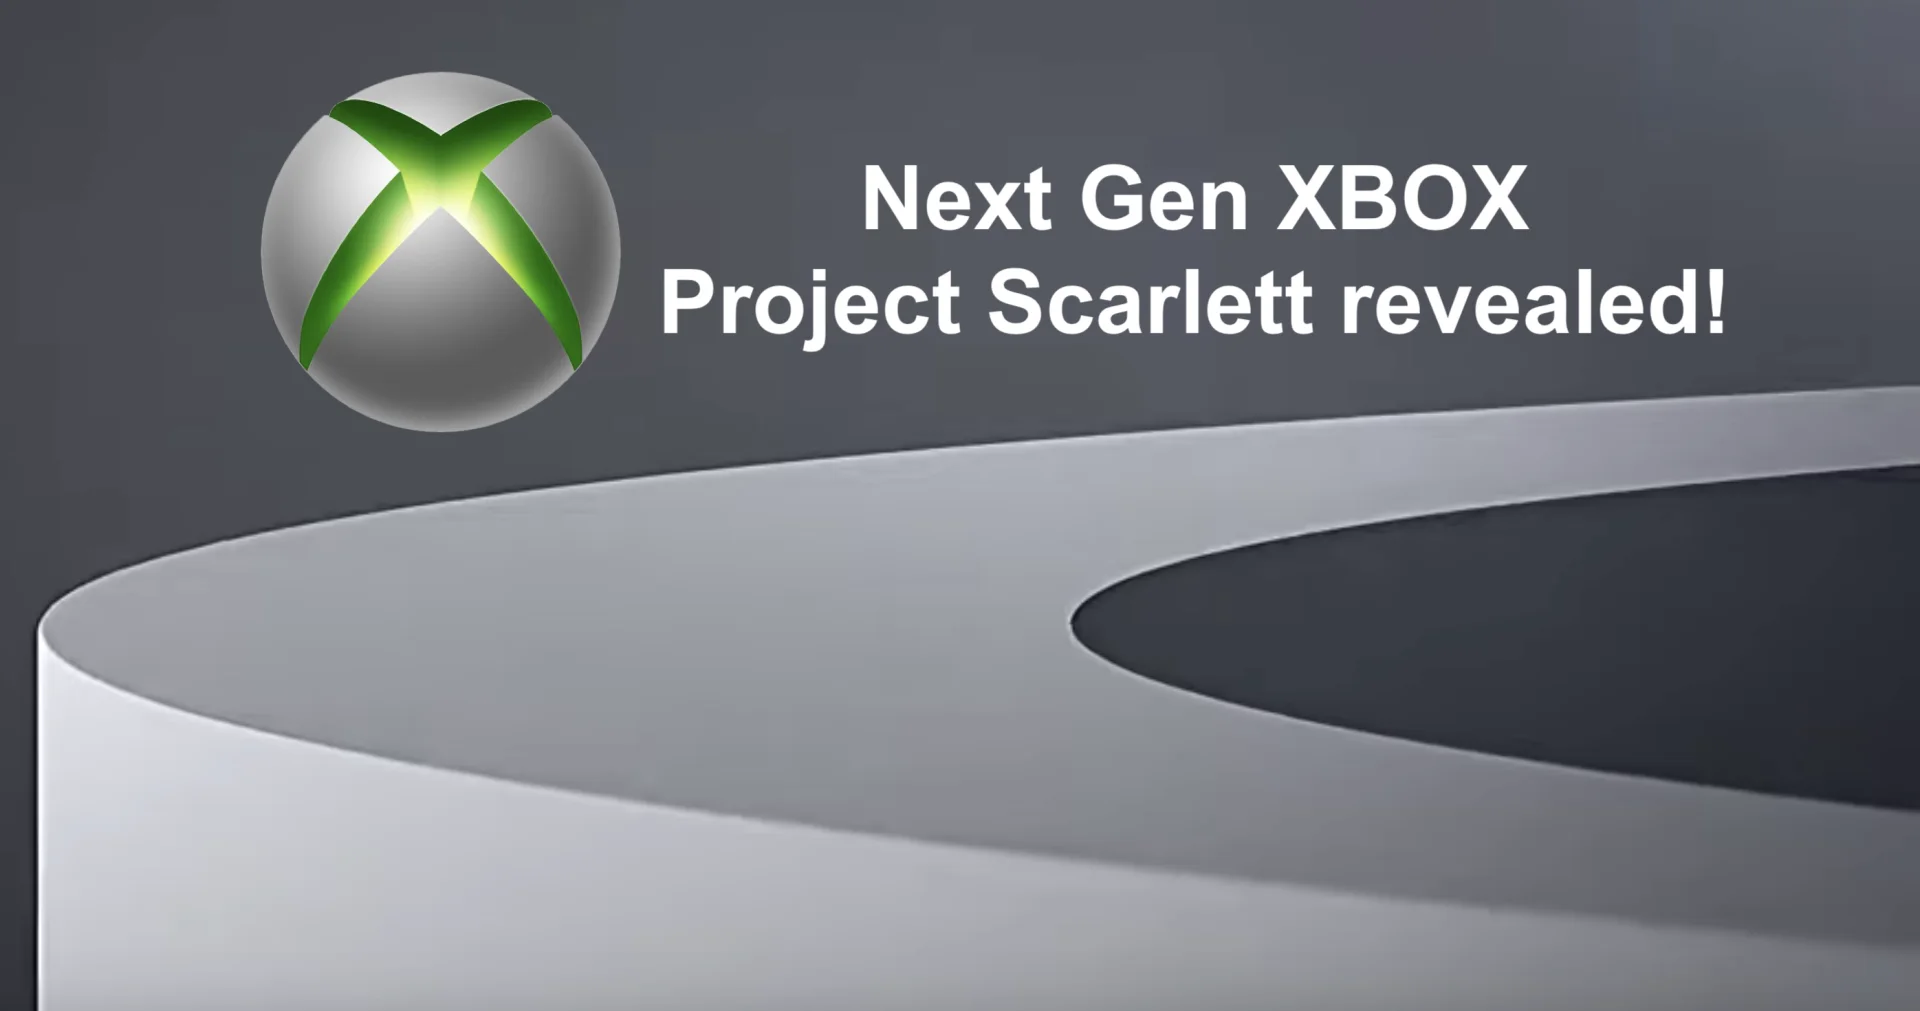 Project Scarlett - Microsoft&#039;s next generation XBOX console announced